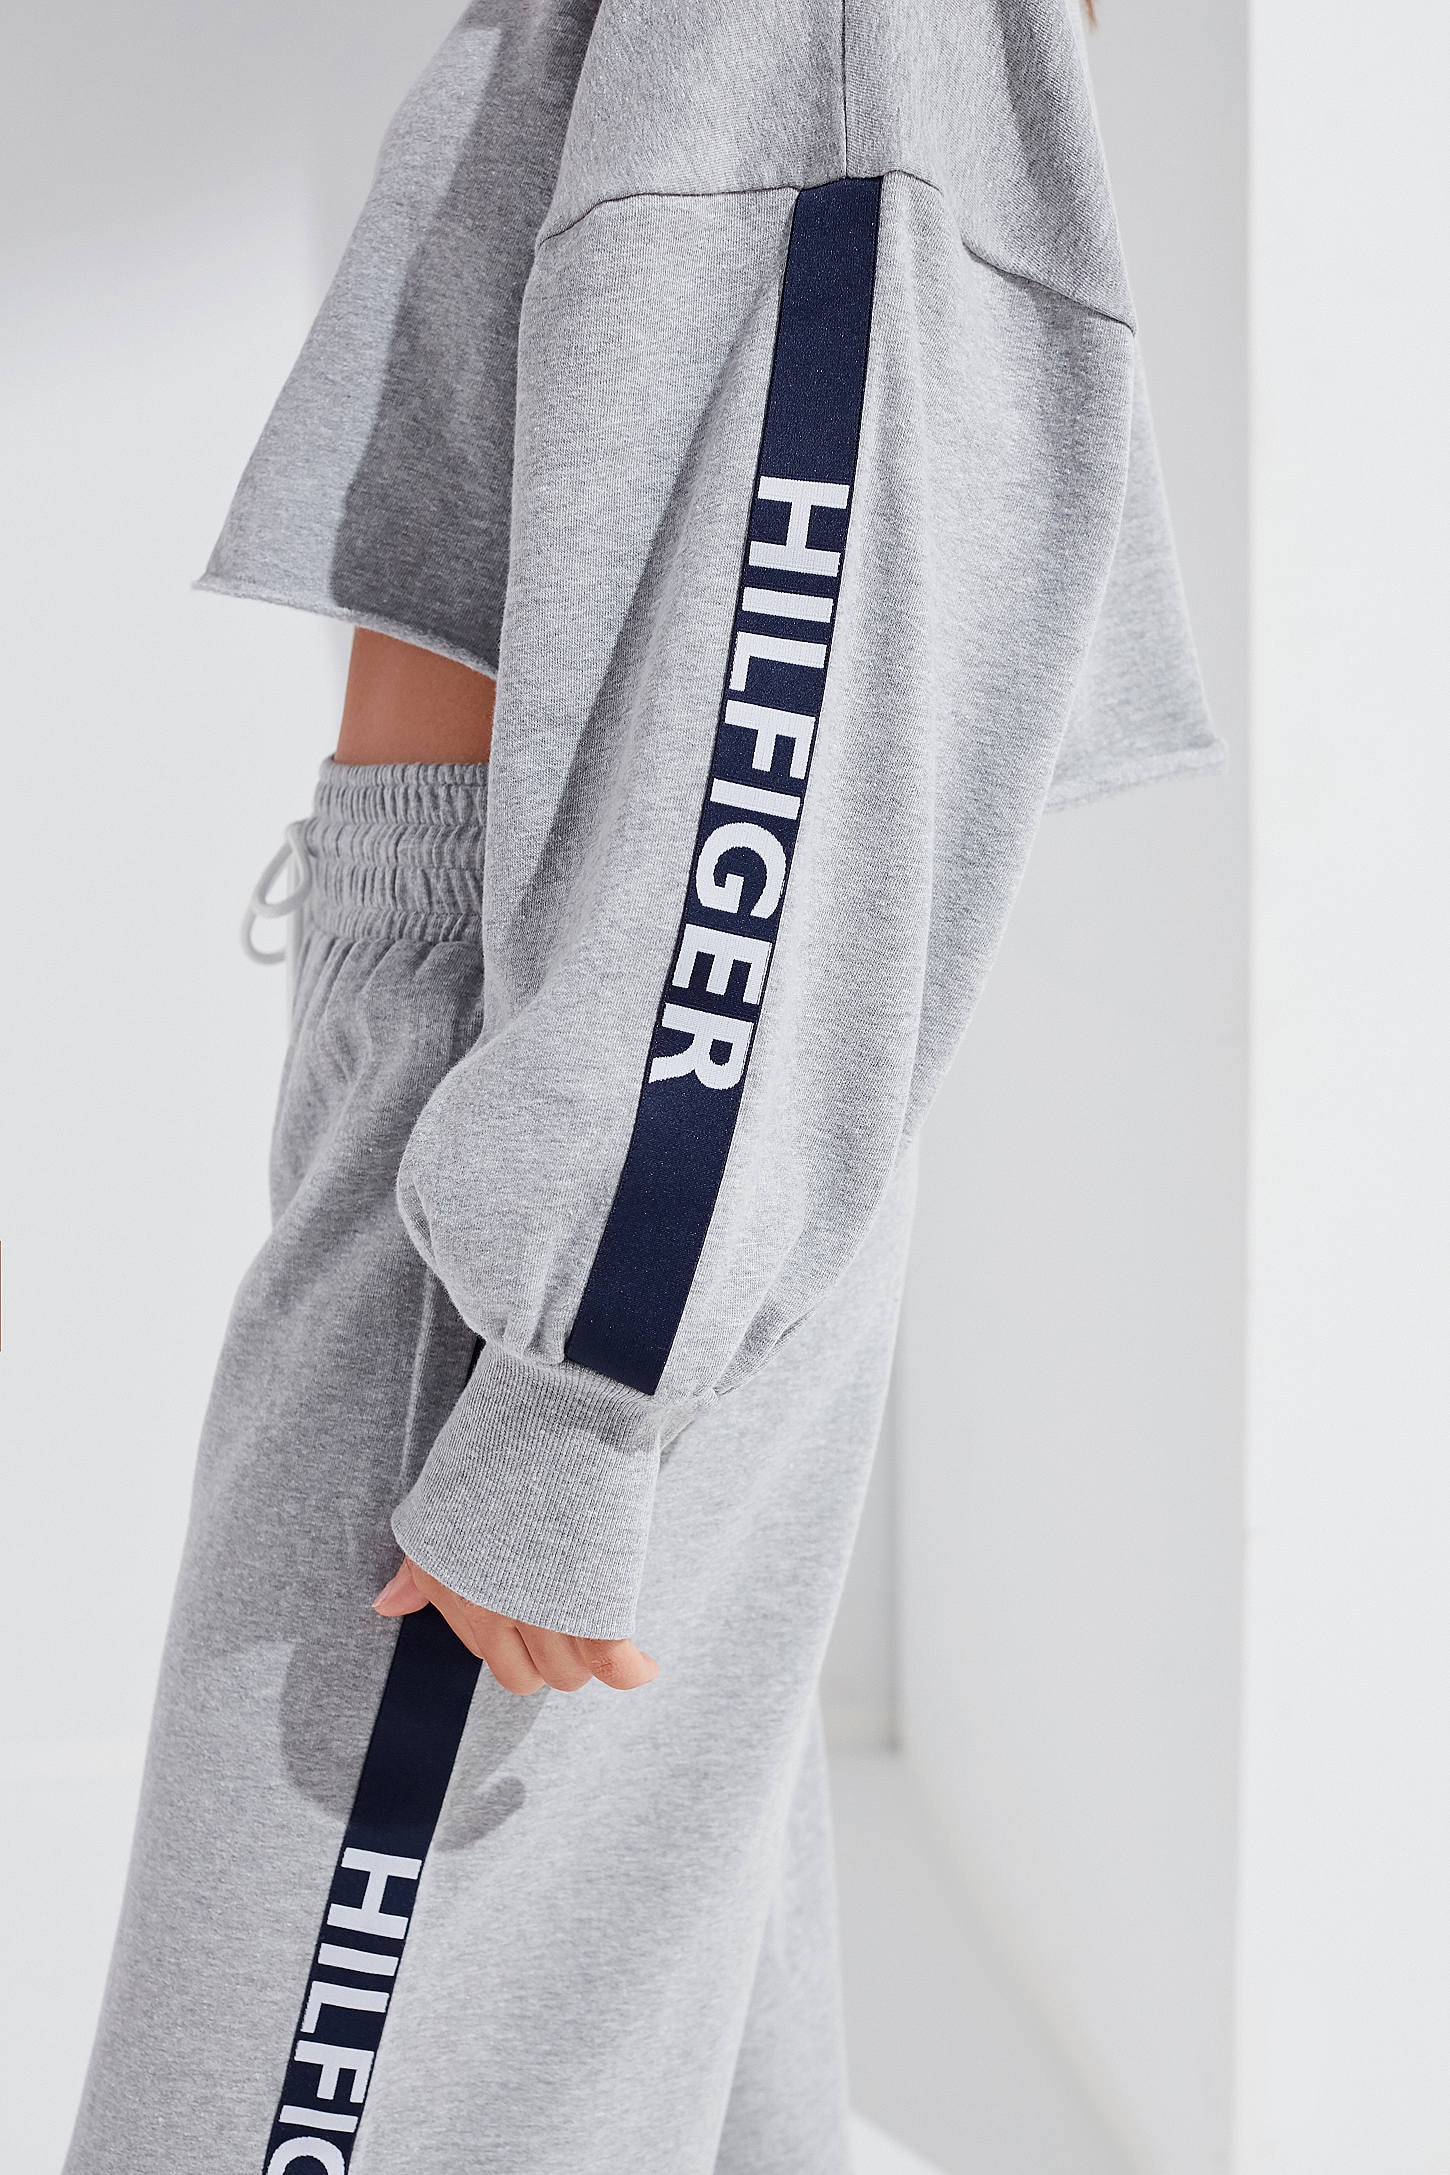 Tommy Hilfiger x Urban Outfitters Logo Set Grey Sweatpants Sweatshirt Cropped Cozy Loungewear Track Pants